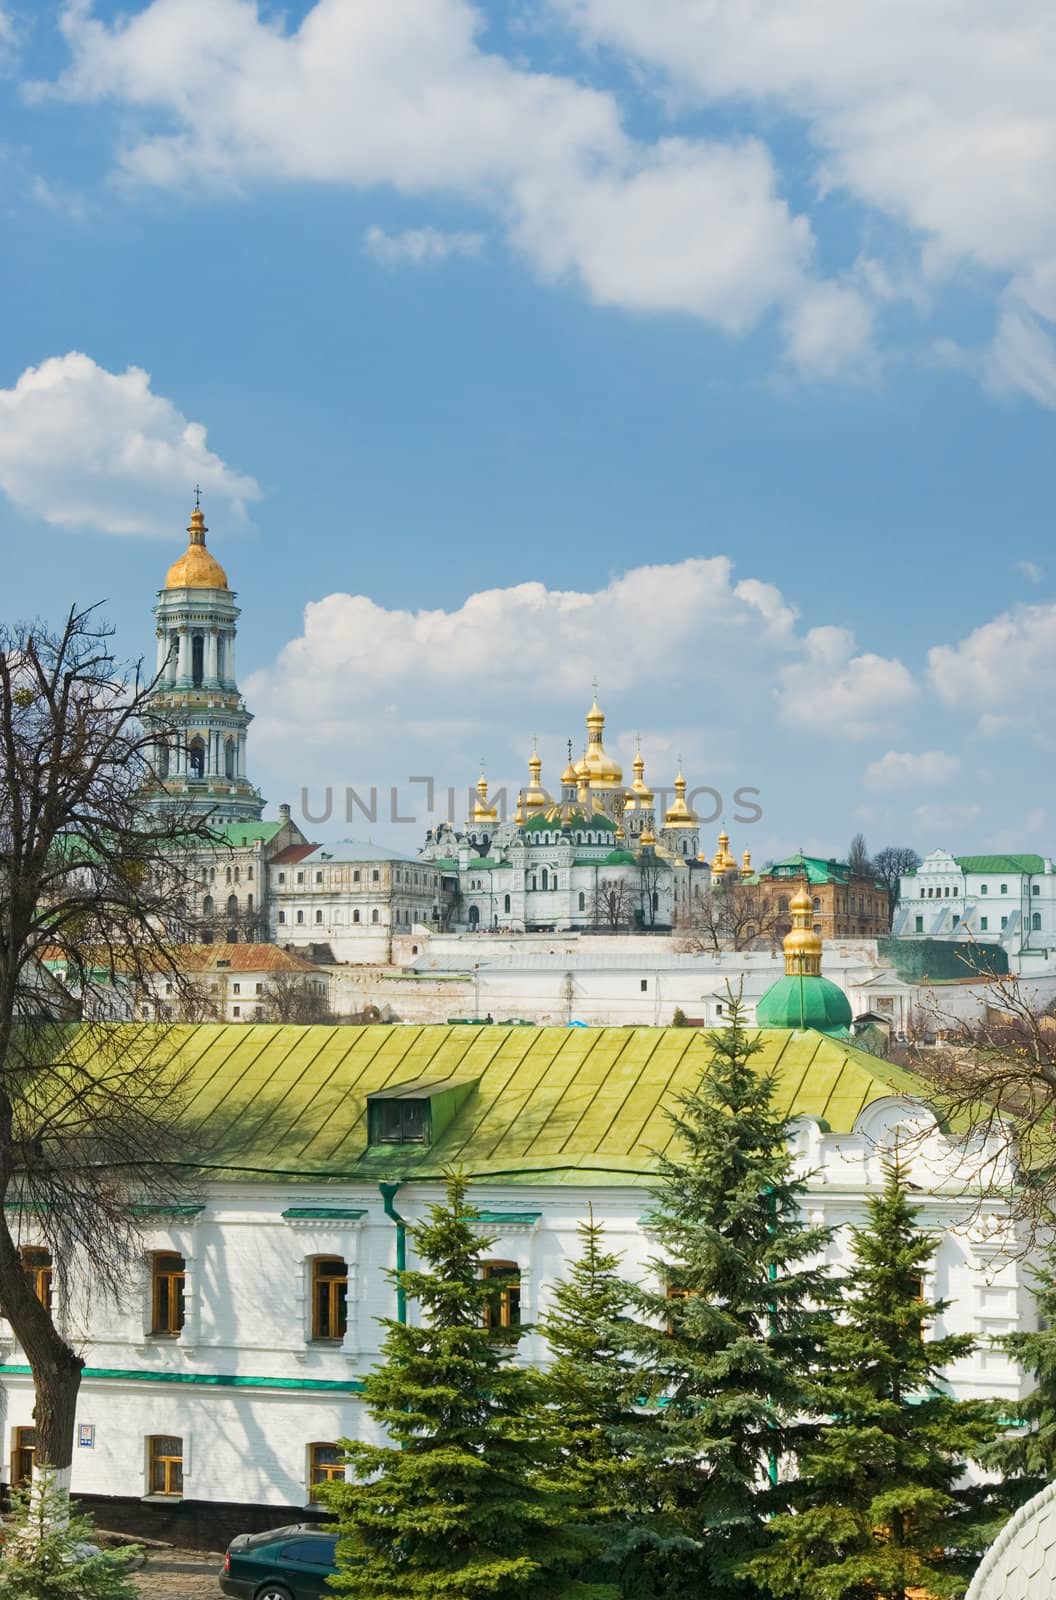 old monastery complex in Kiev over blue sky